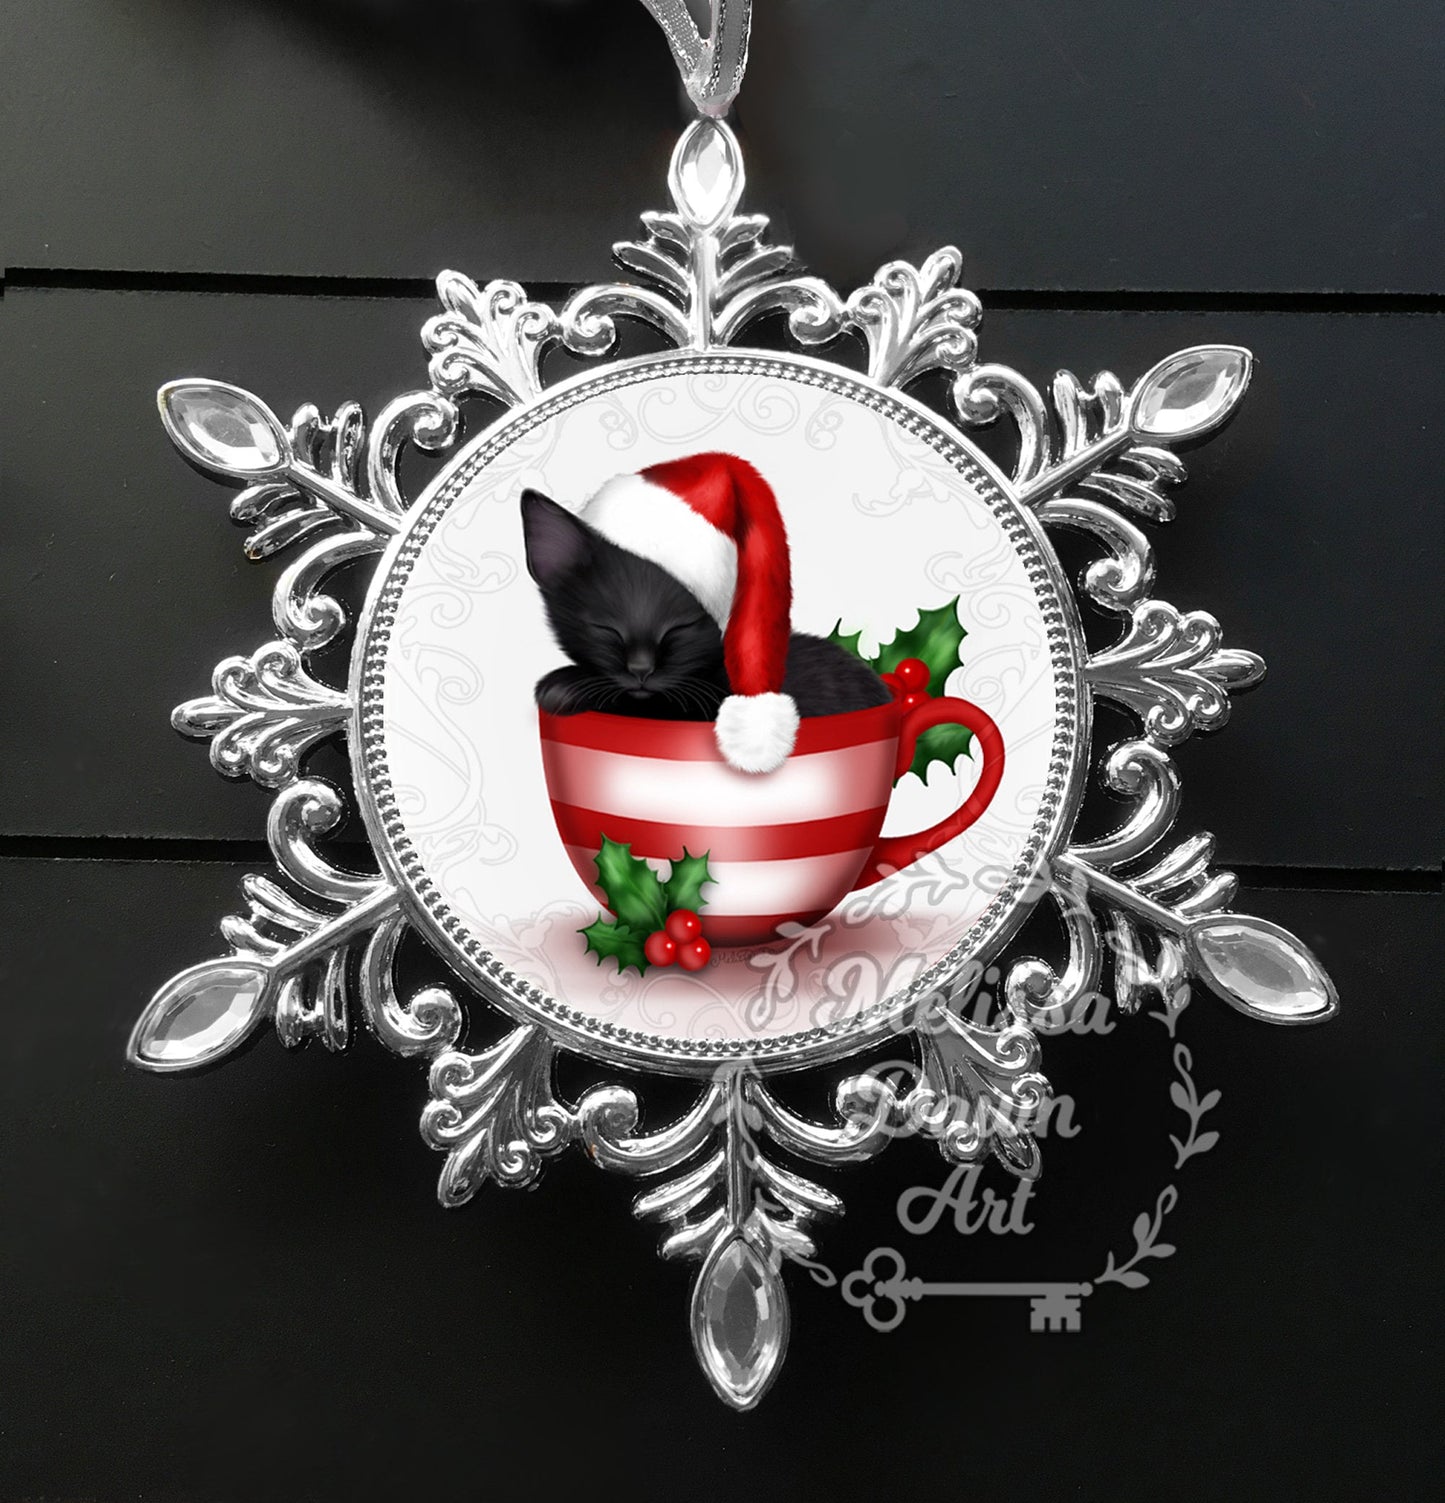 Personalized Cat Ornament / Black Cat Ornament / Custom Cat Ornament / Black Cat Art / Cat Christmas Ornament / Santa Cat / Cat in Santa Hat